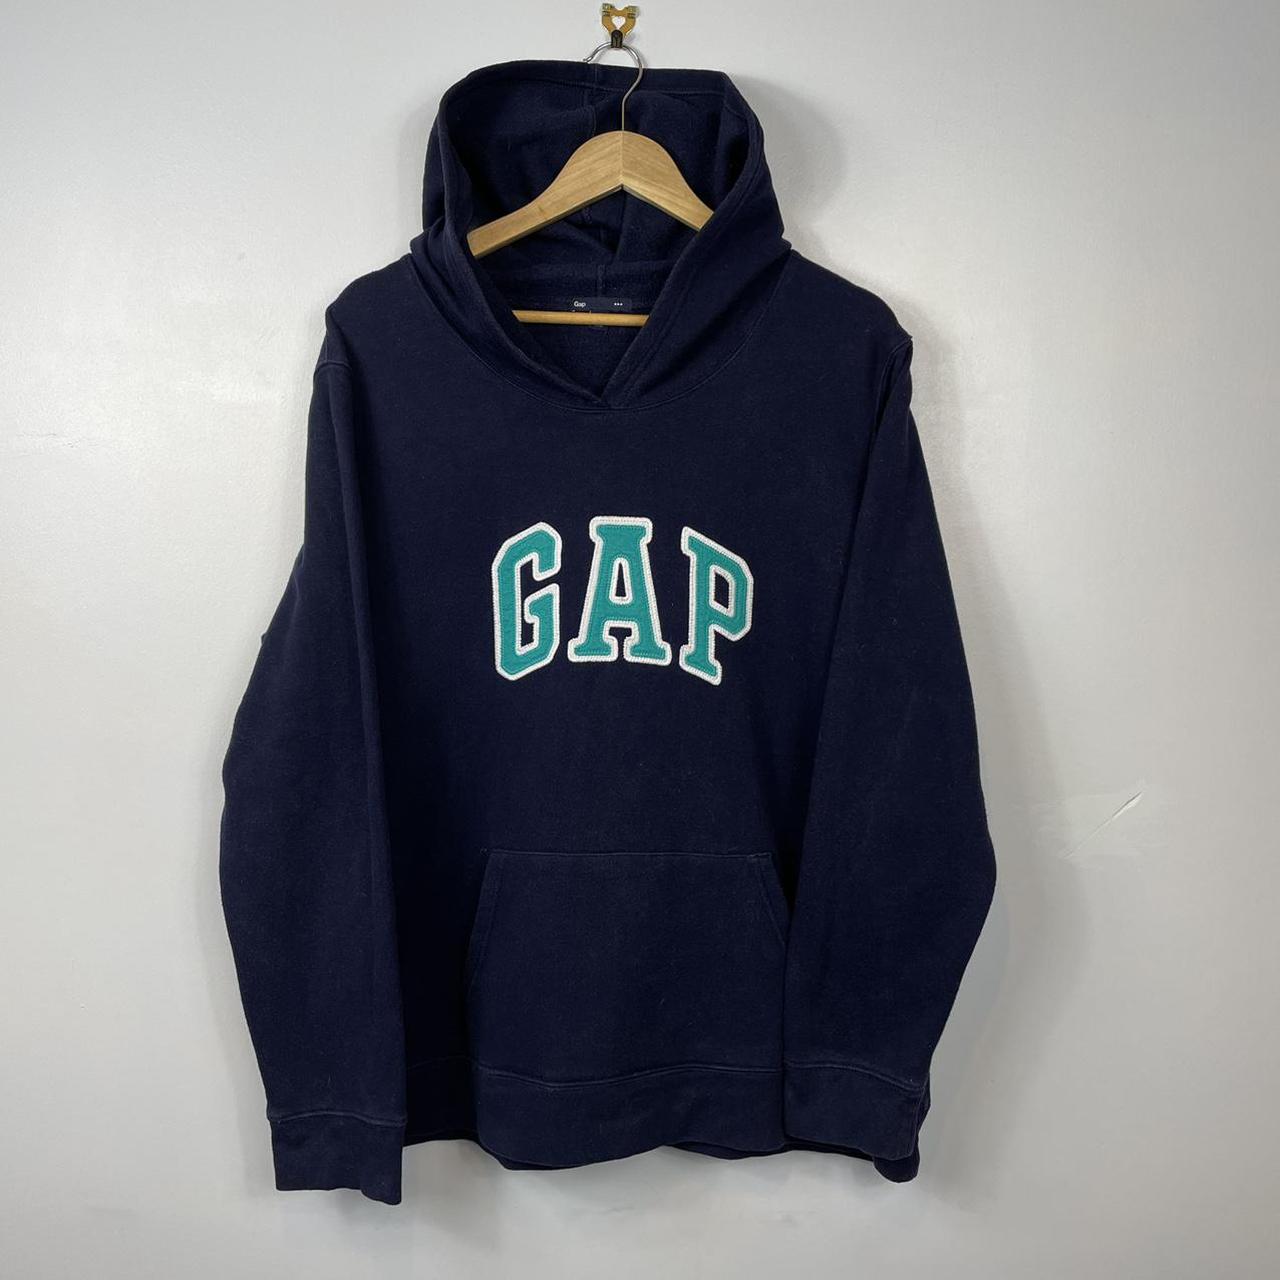 Vintage Gap Hoodie Embroidered Spell Out, Navy... - Depop